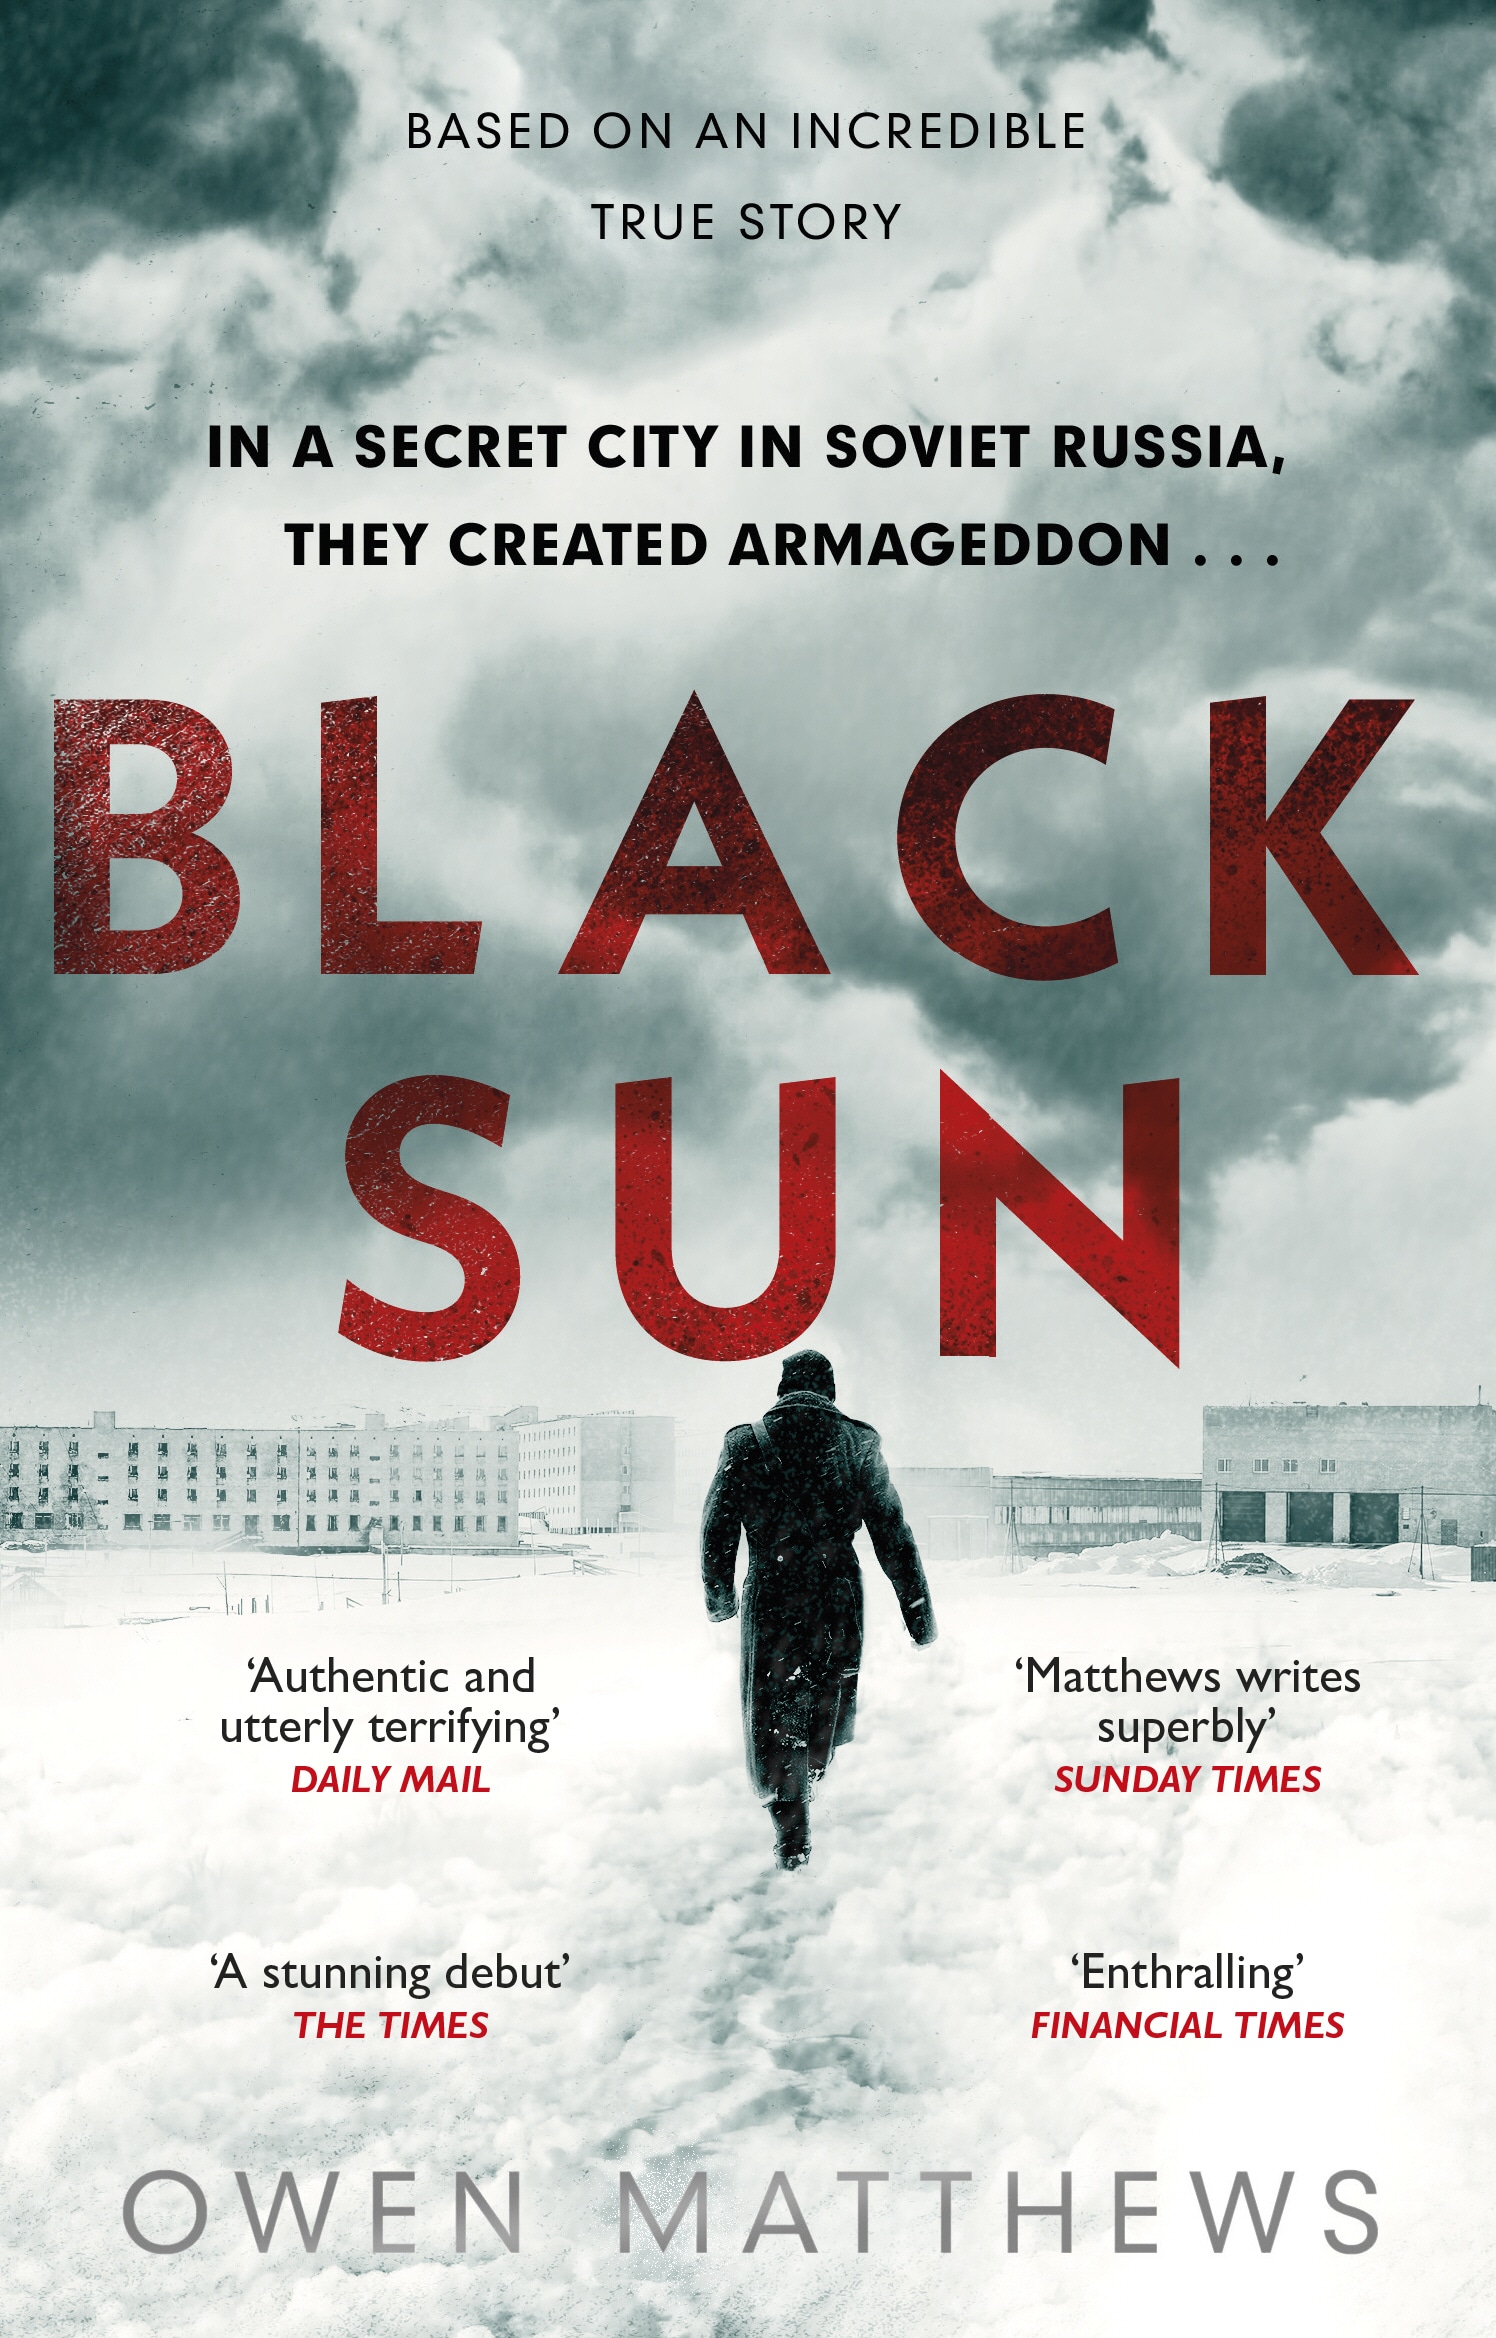 Book “Black Sun” by Owen Matthews — July 9, 2020